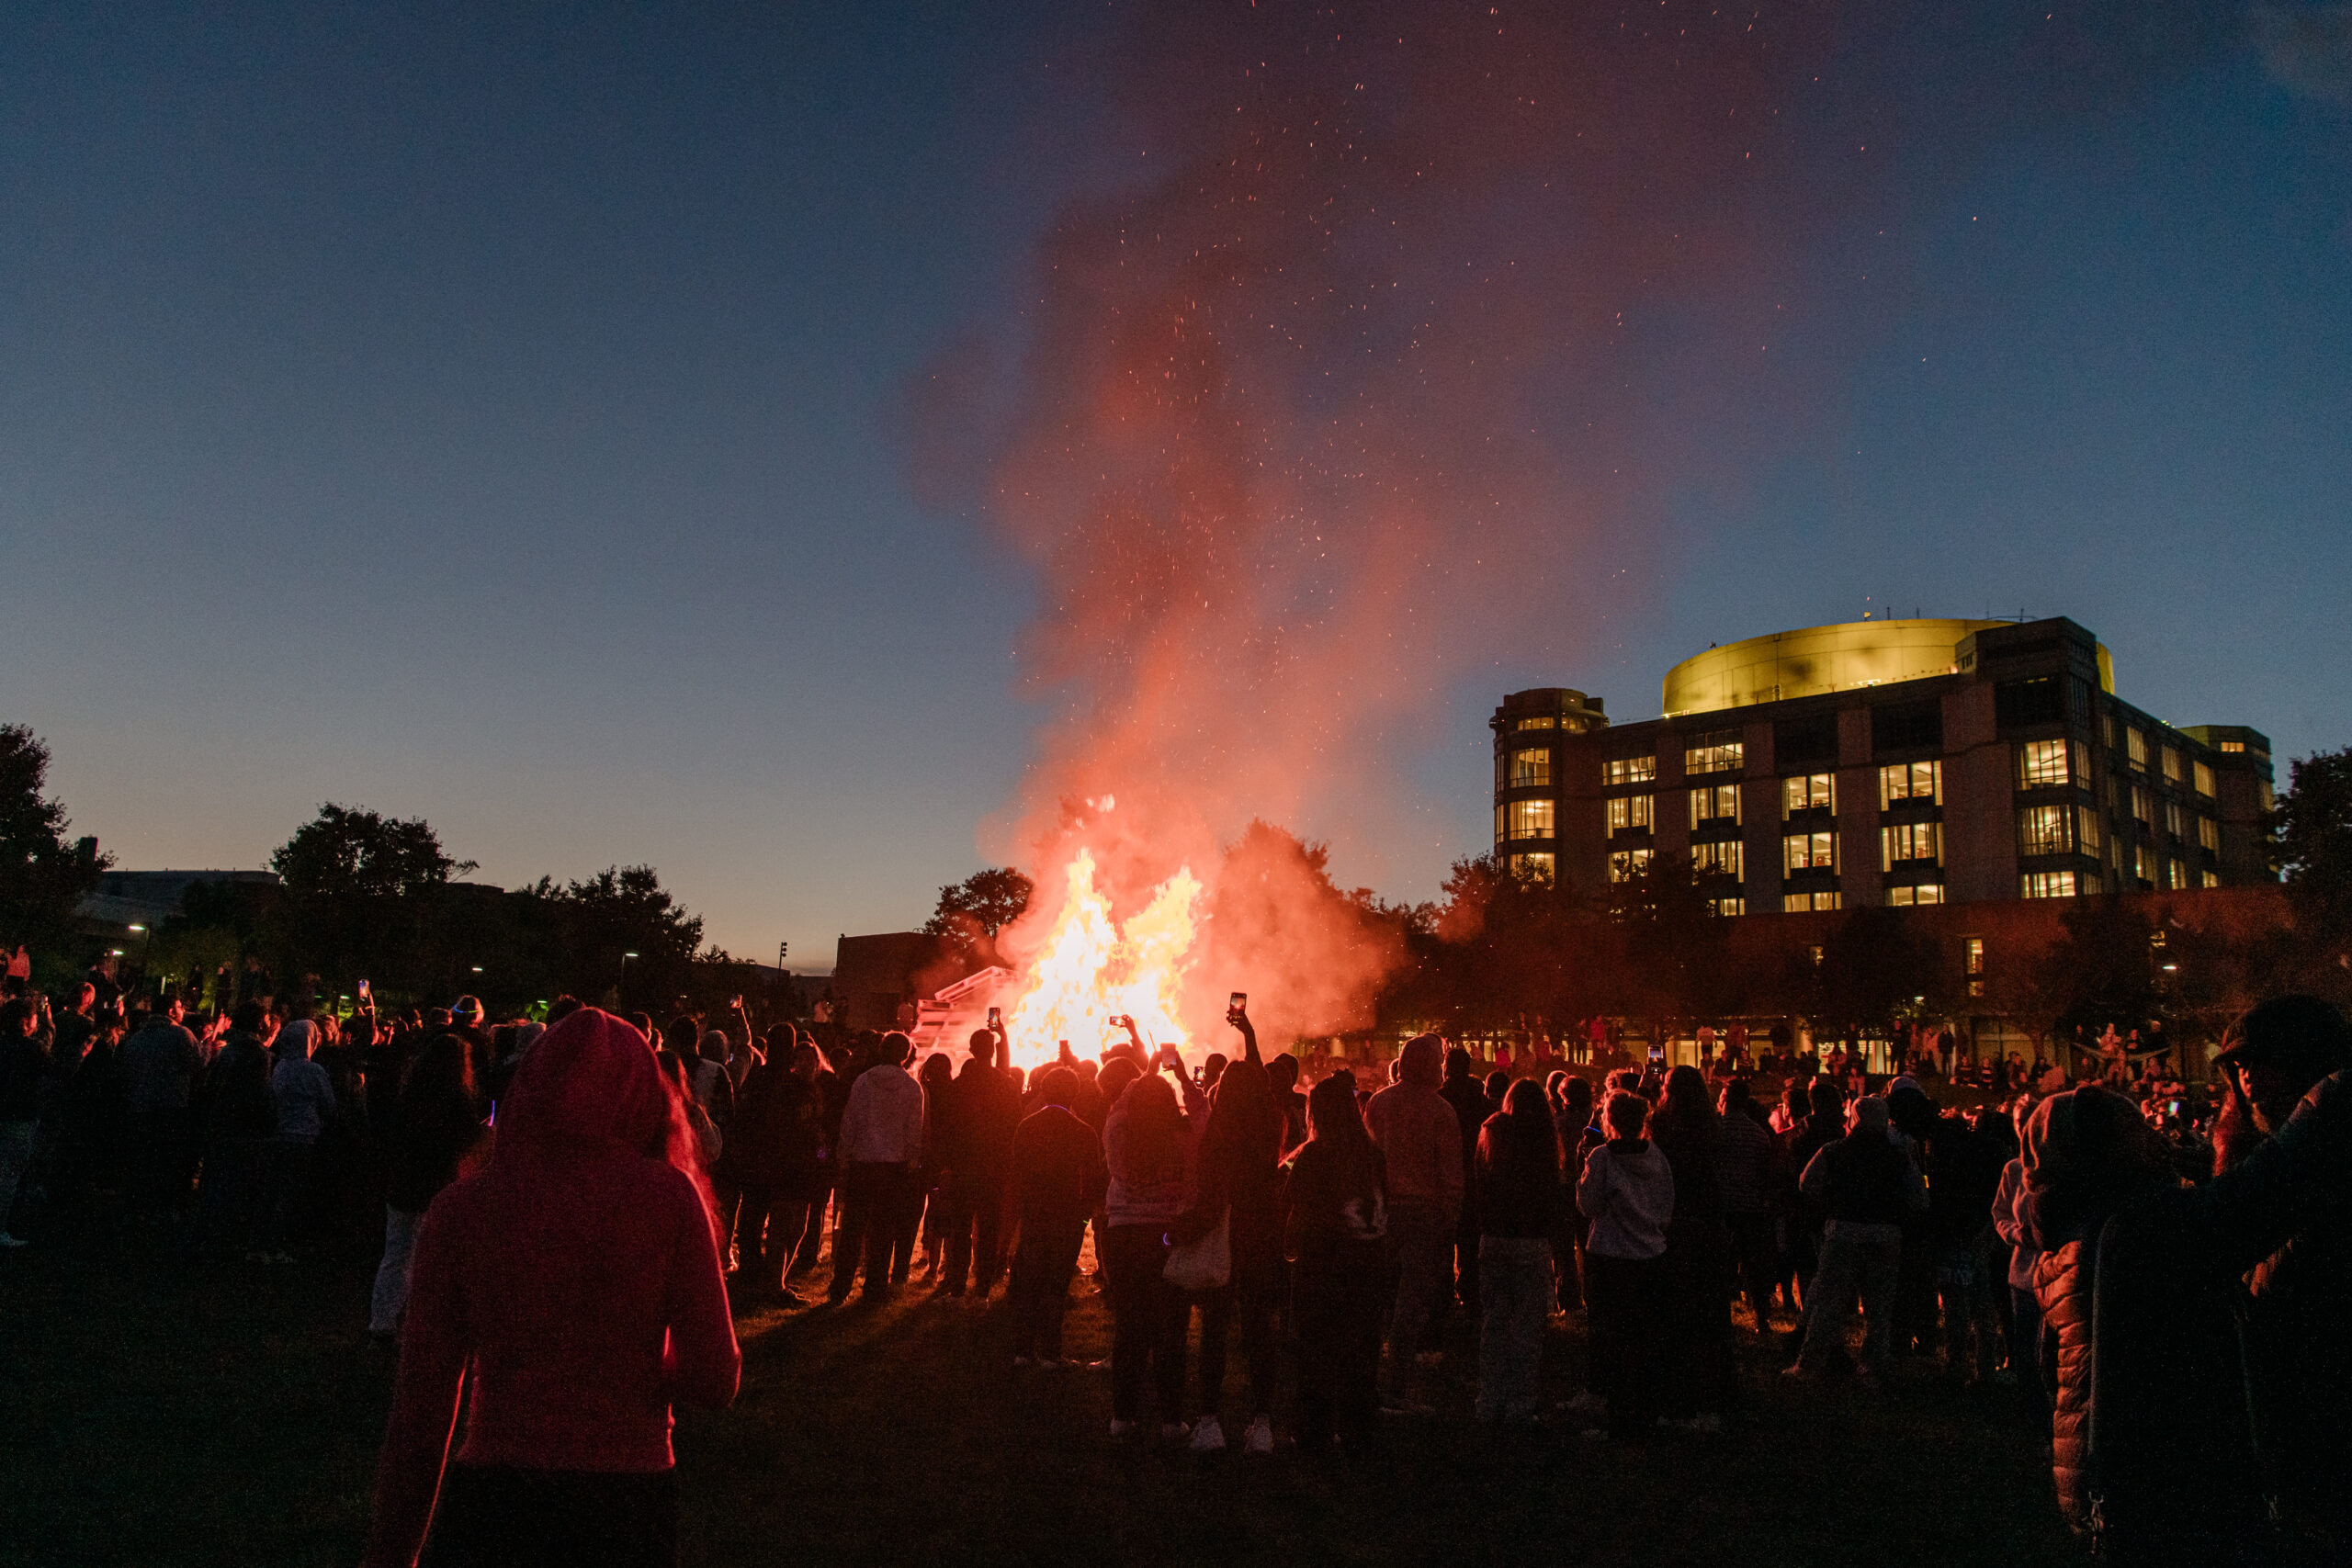 a crowd gathers at a bonfire at dusk